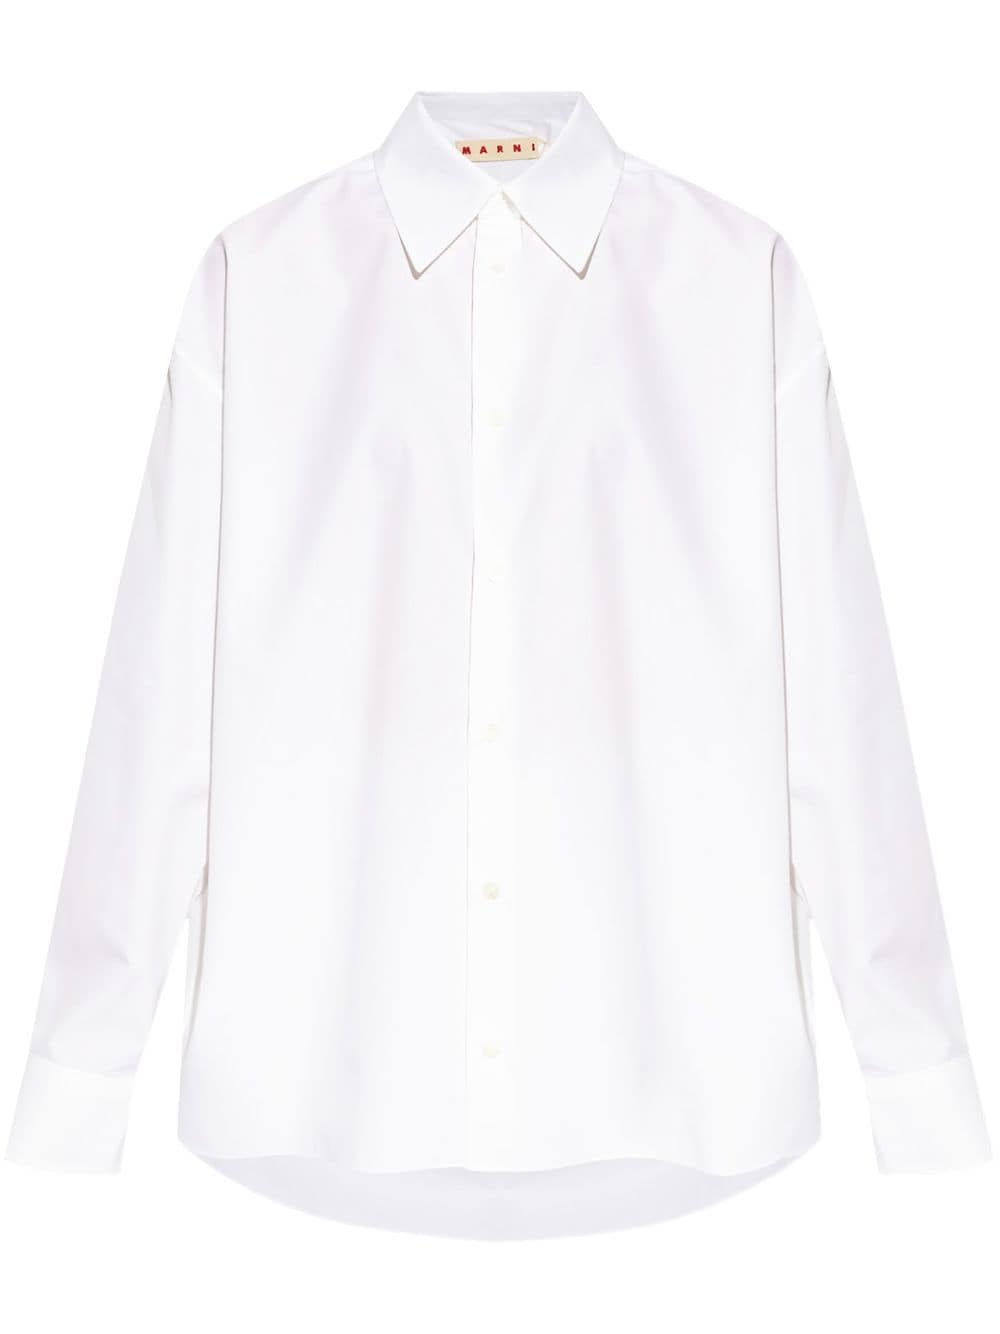 Marni cotton shirt - White von Marni